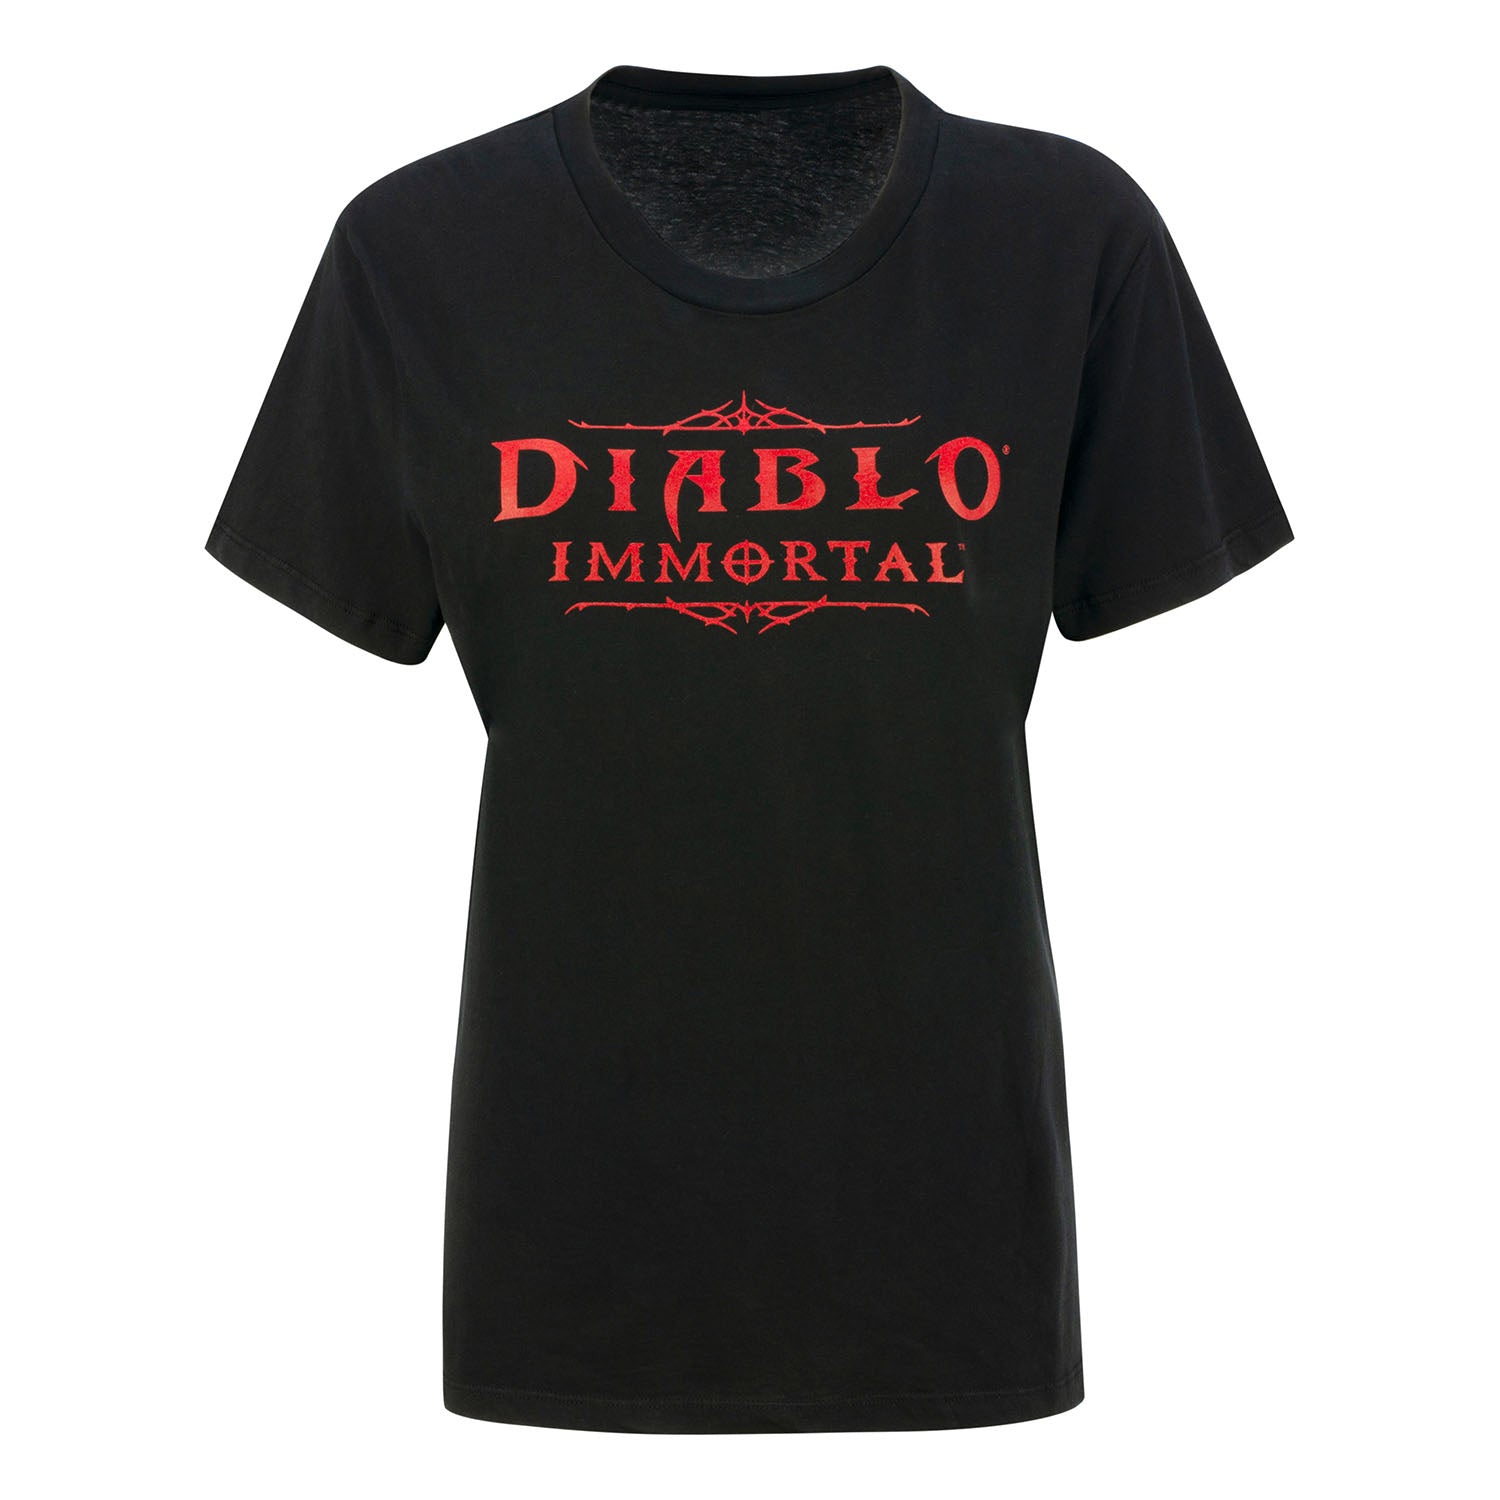 Diablo Immortal Women's Black T-Shirt - Front View